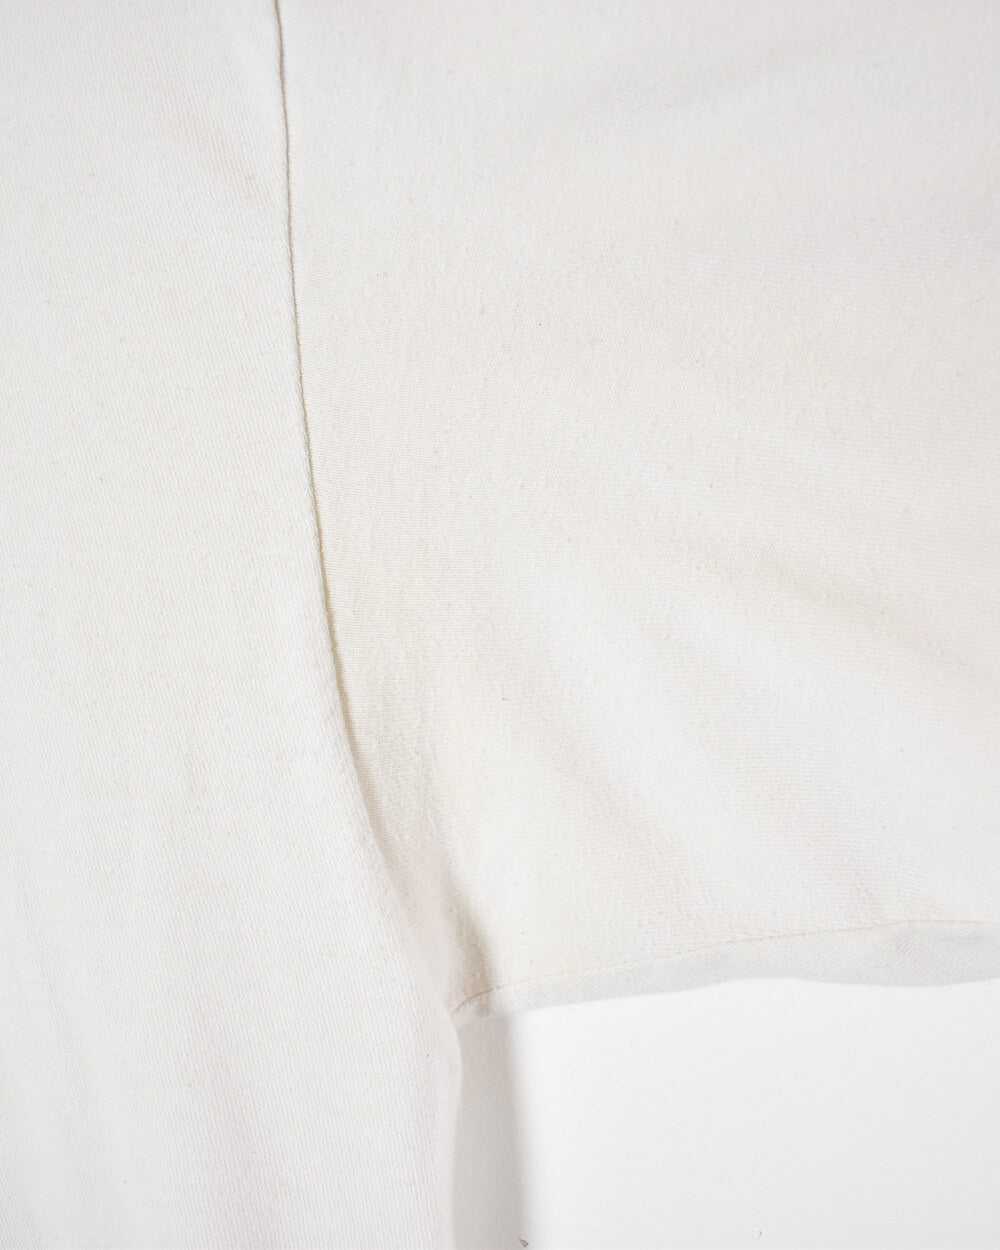 White Stussy International T-Shirt - Medium